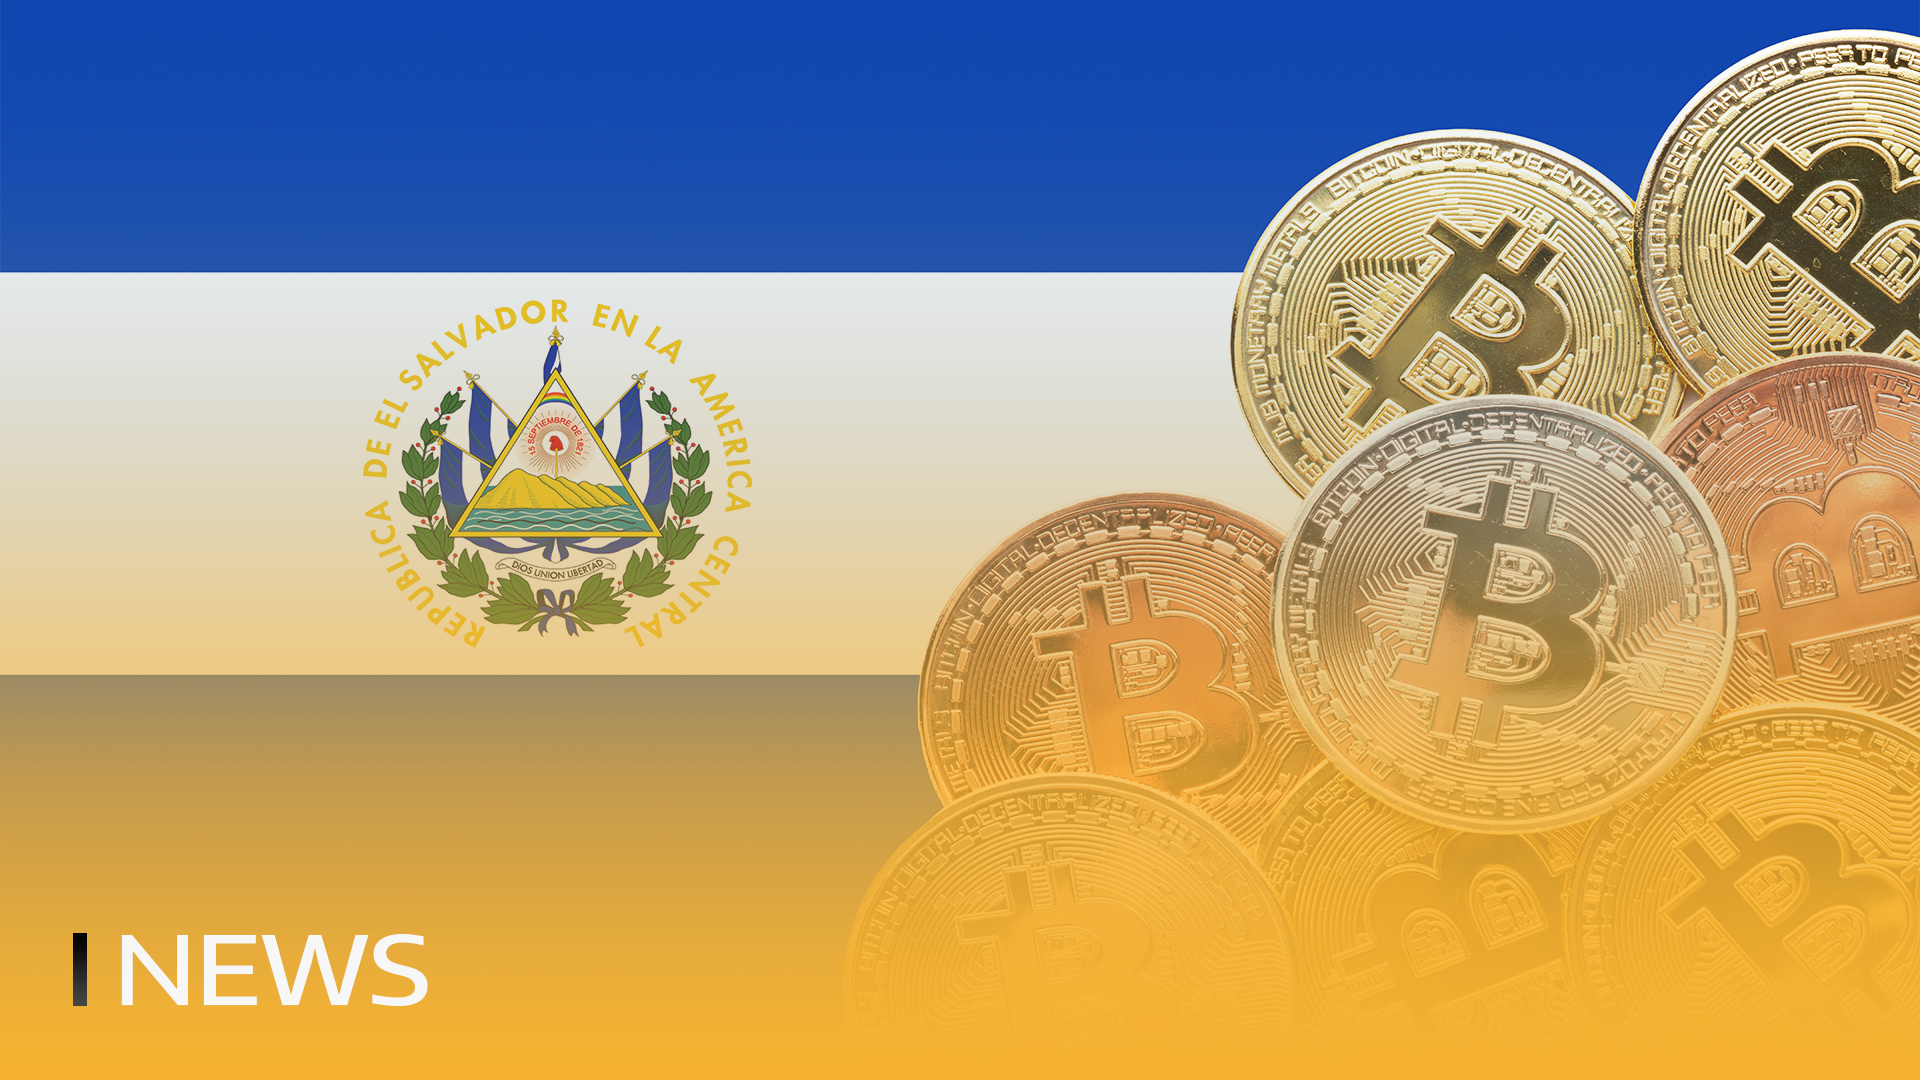 El Salvador Bitcoin Holdings Hit Rekordni 164 milijonov $